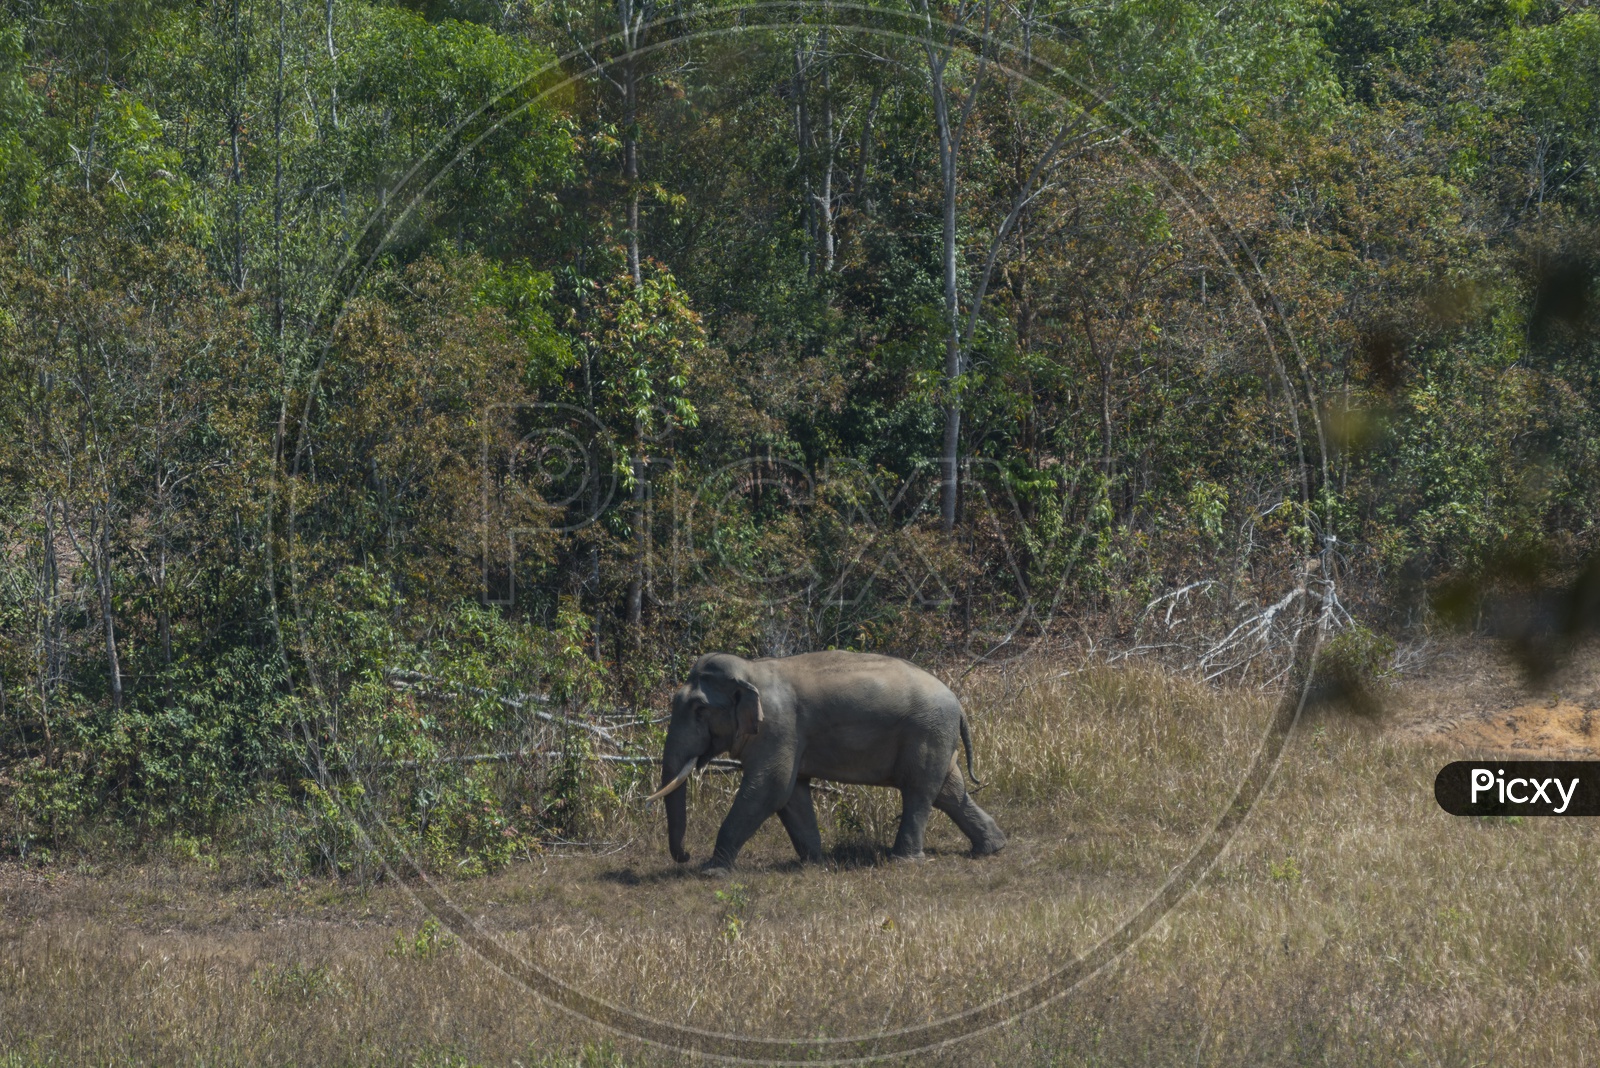 Wild Elephant Or Asian Wild Elephant In Khao Yai National Park